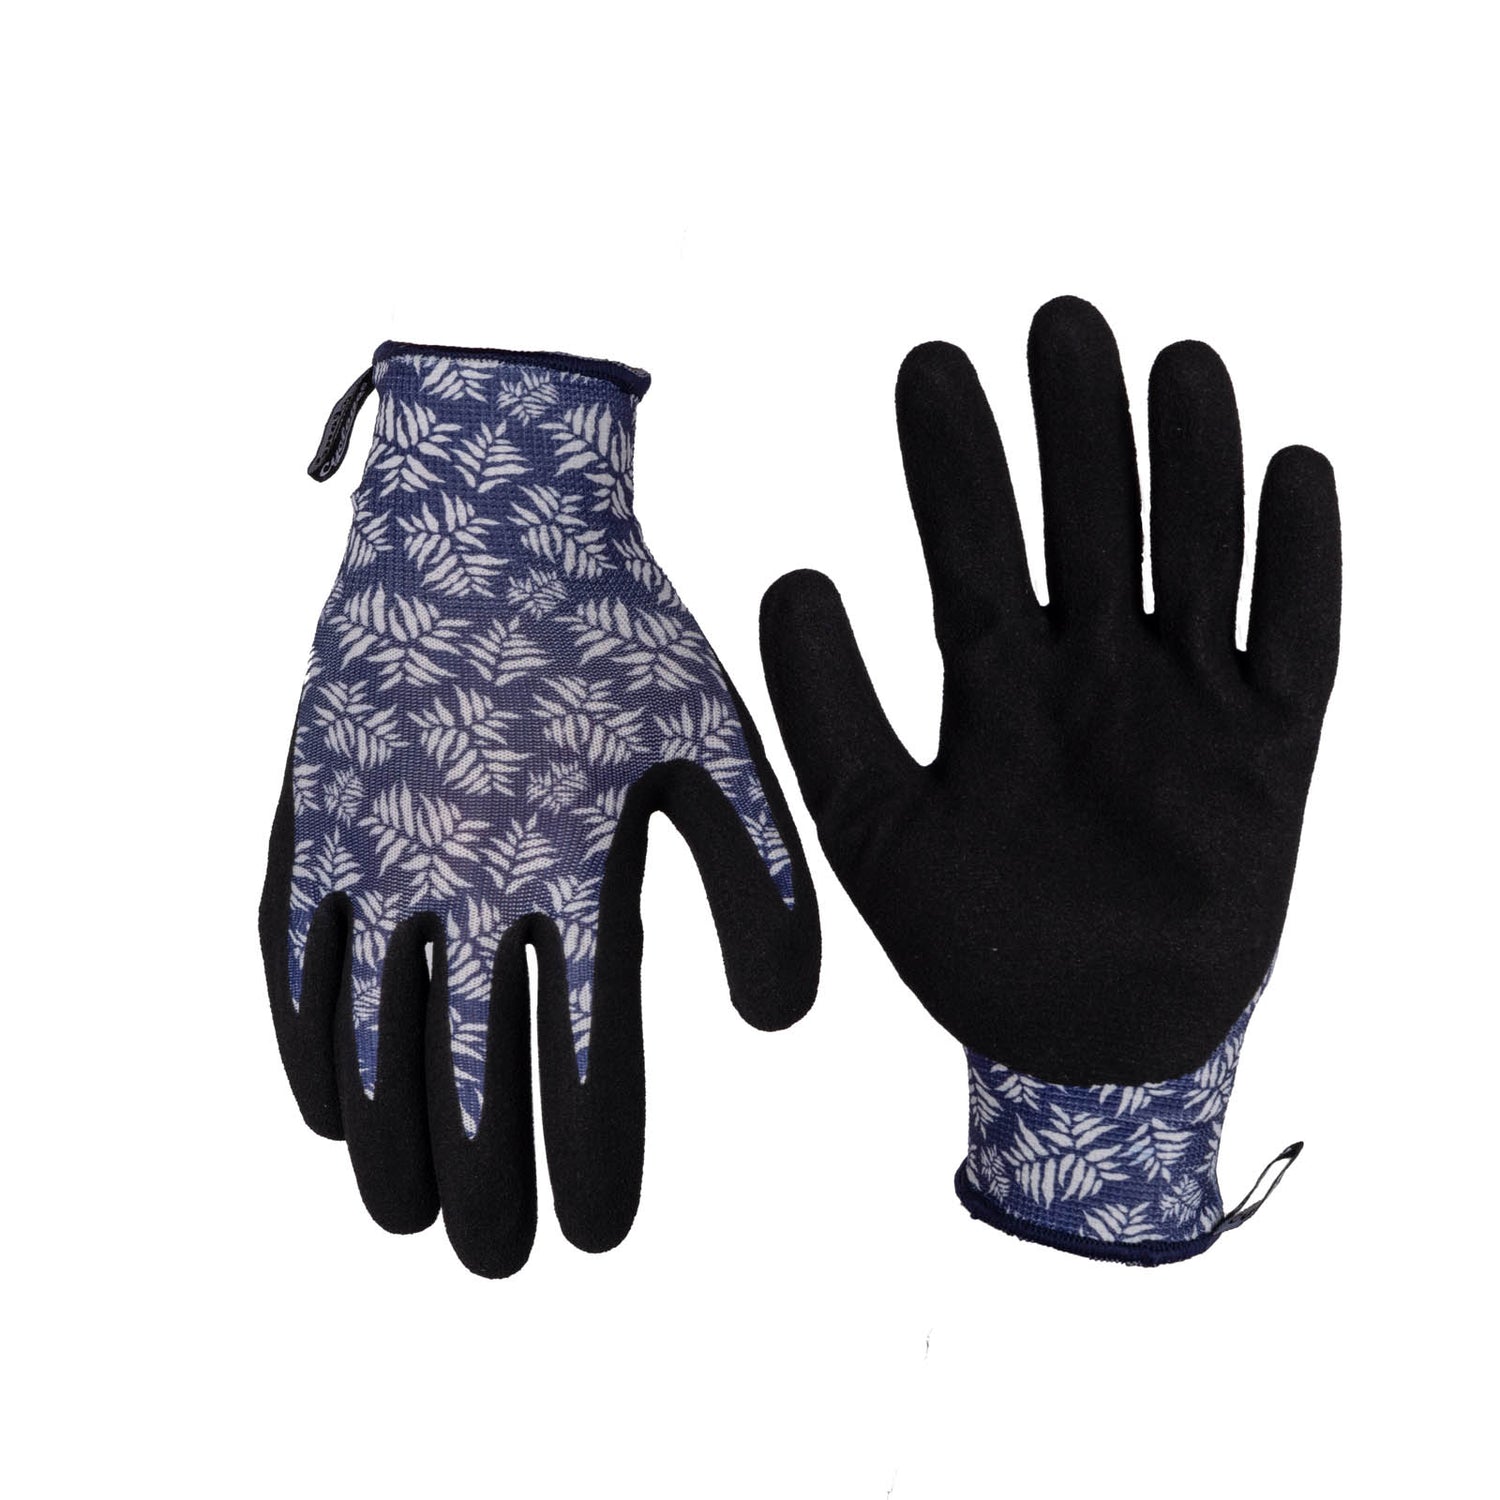 Patterned Garden Glove (Fern)